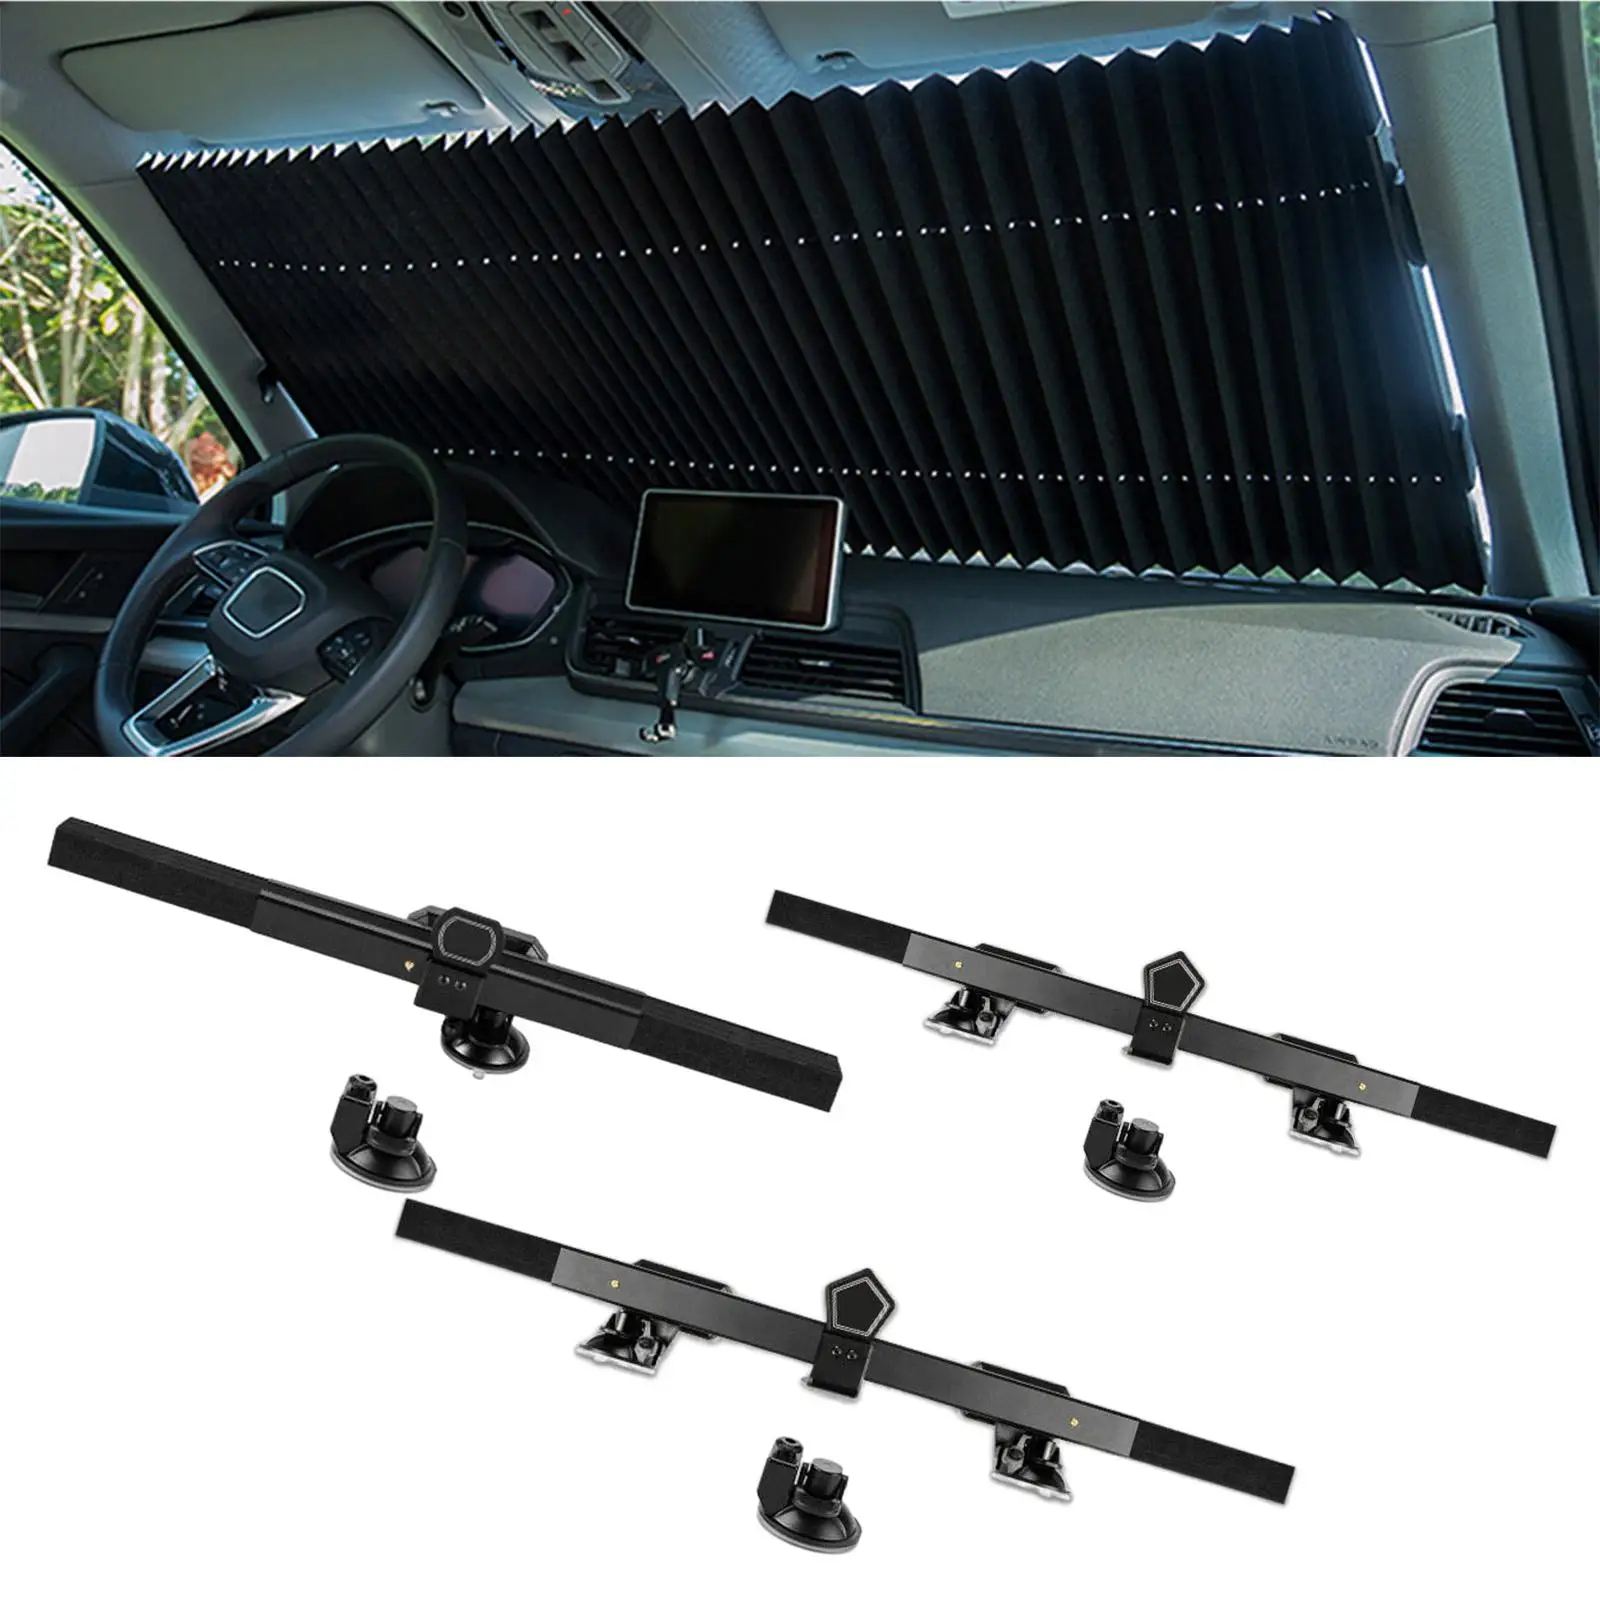 Upgrade Car Retractable Windshield Sun Shades Sun Visor Curtain Durable Adjustable for Car Truck Camping Automotive Vehicle